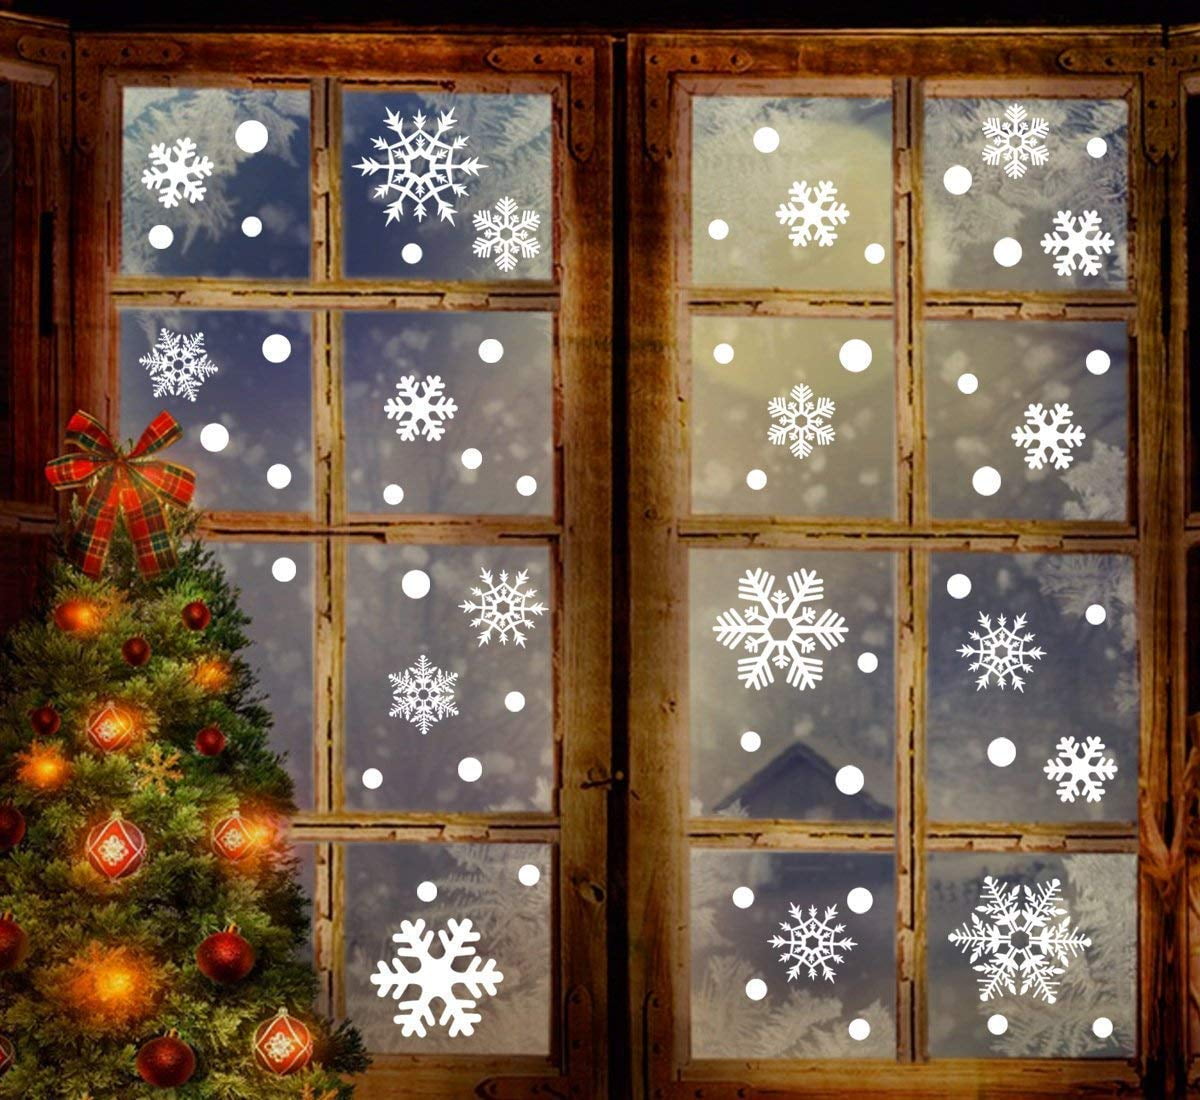 LOKIPA Christmas Window Cling Sticker,200 Christmas Decorations Window Decals Sticker for Christmas Window Decoration